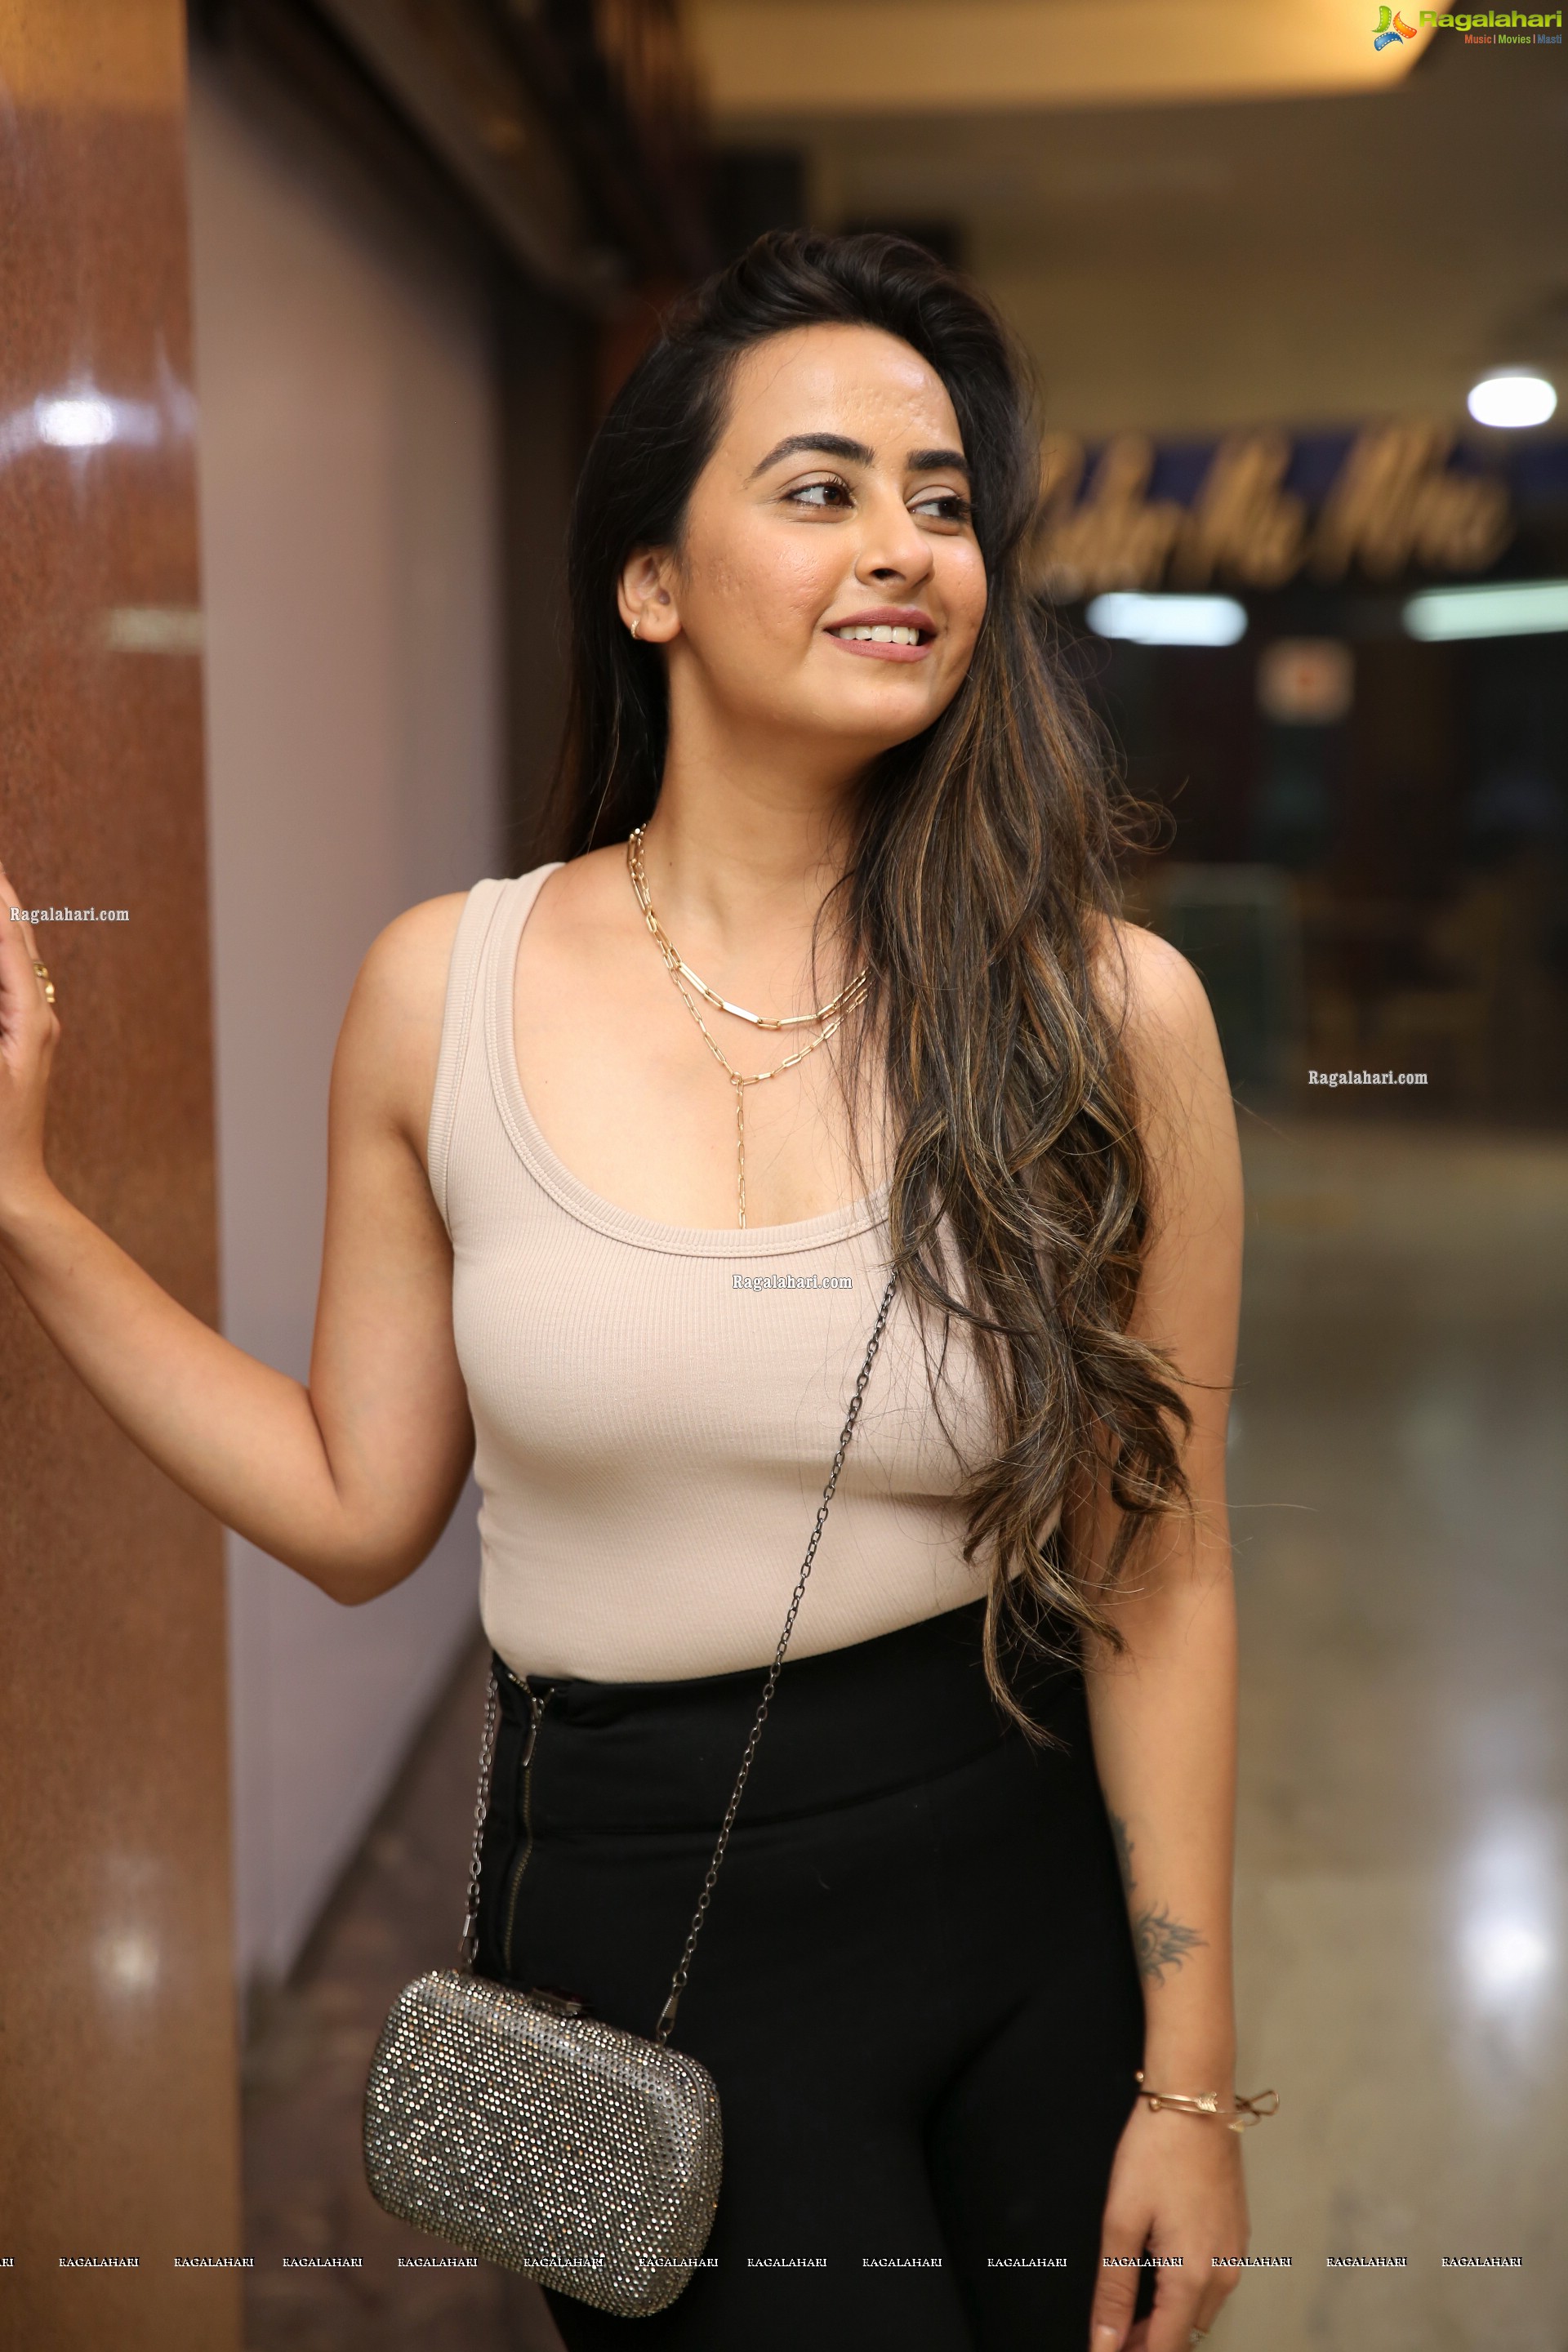 Ameeksha Pawar Stills Snapped at City Center Mall, HD Photo Gallery